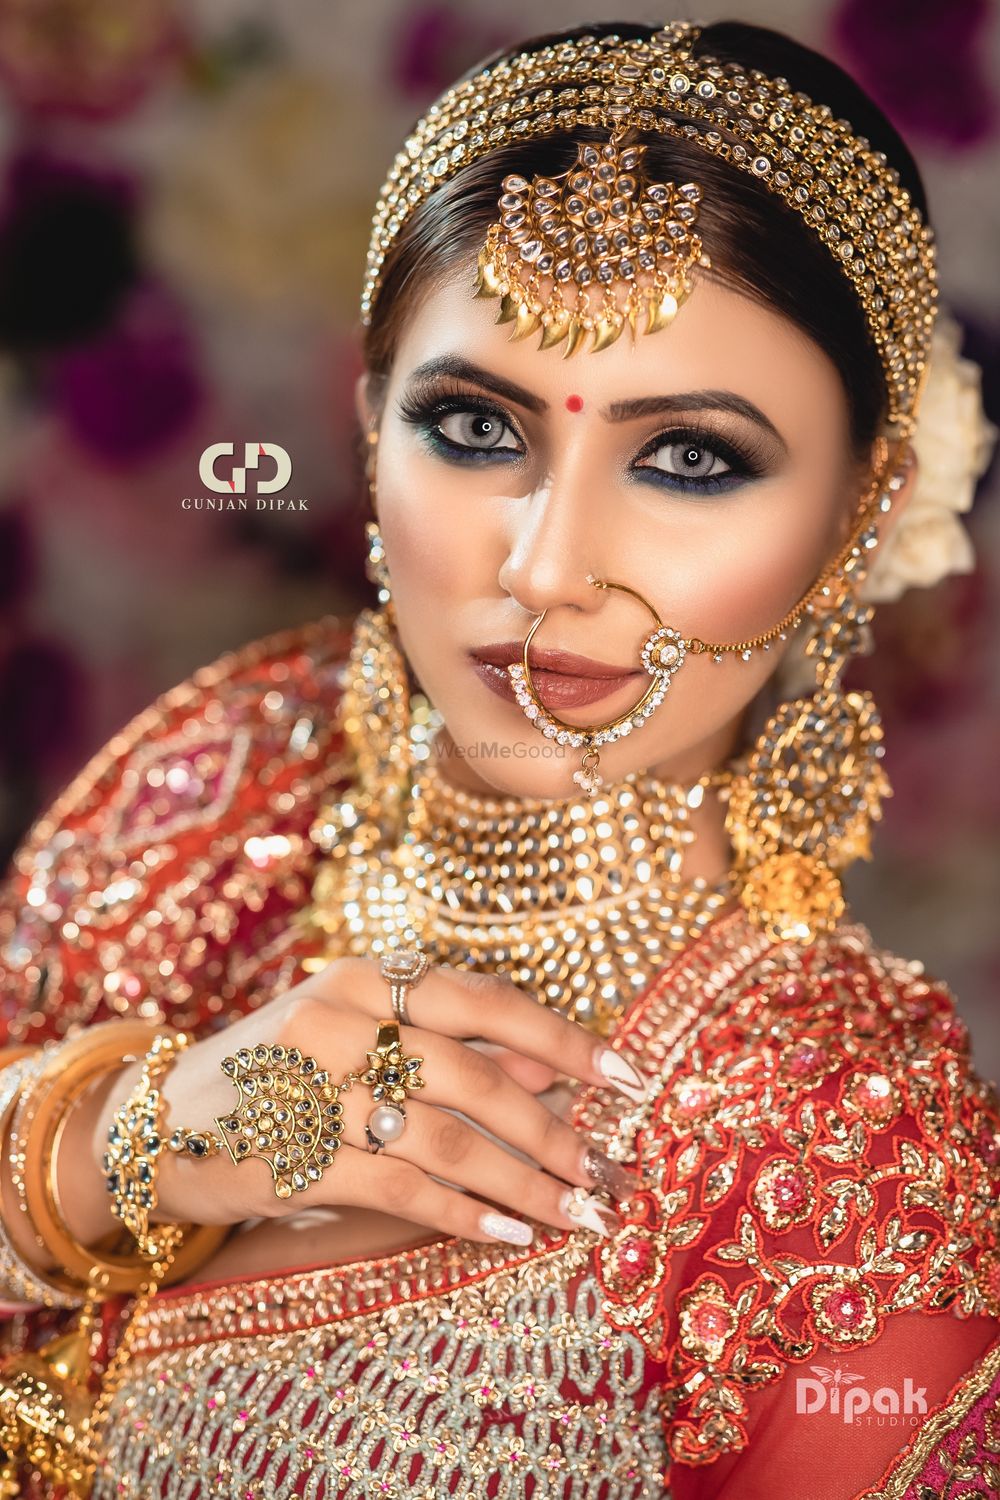 Photo From Bridal Look - By Gunjan Dipak Makeovers